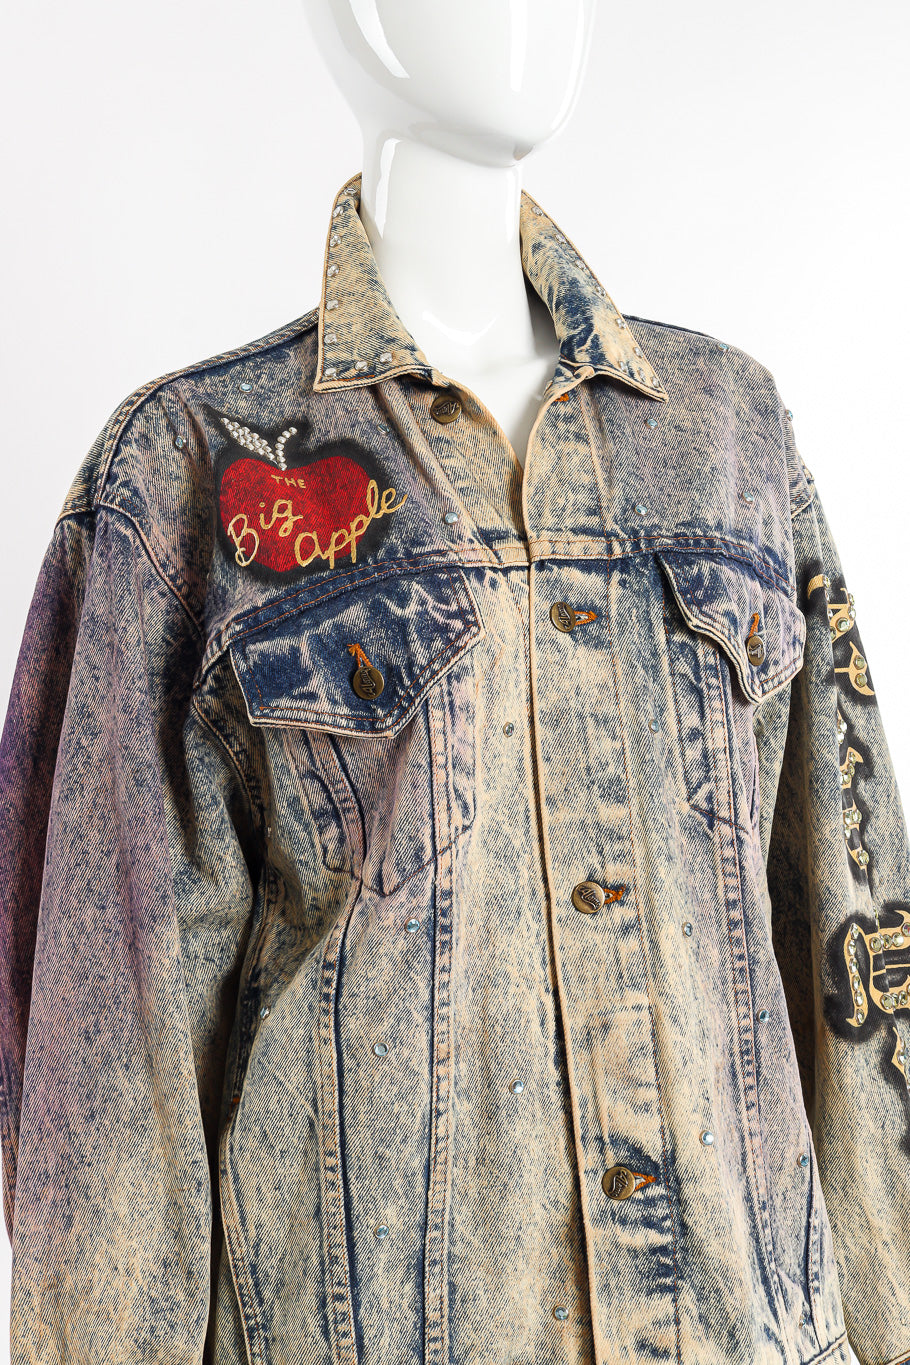 Vintage Tony Alamo The Big Apple Denim Jacket 3/4 view on mannequin closeup @Recessla